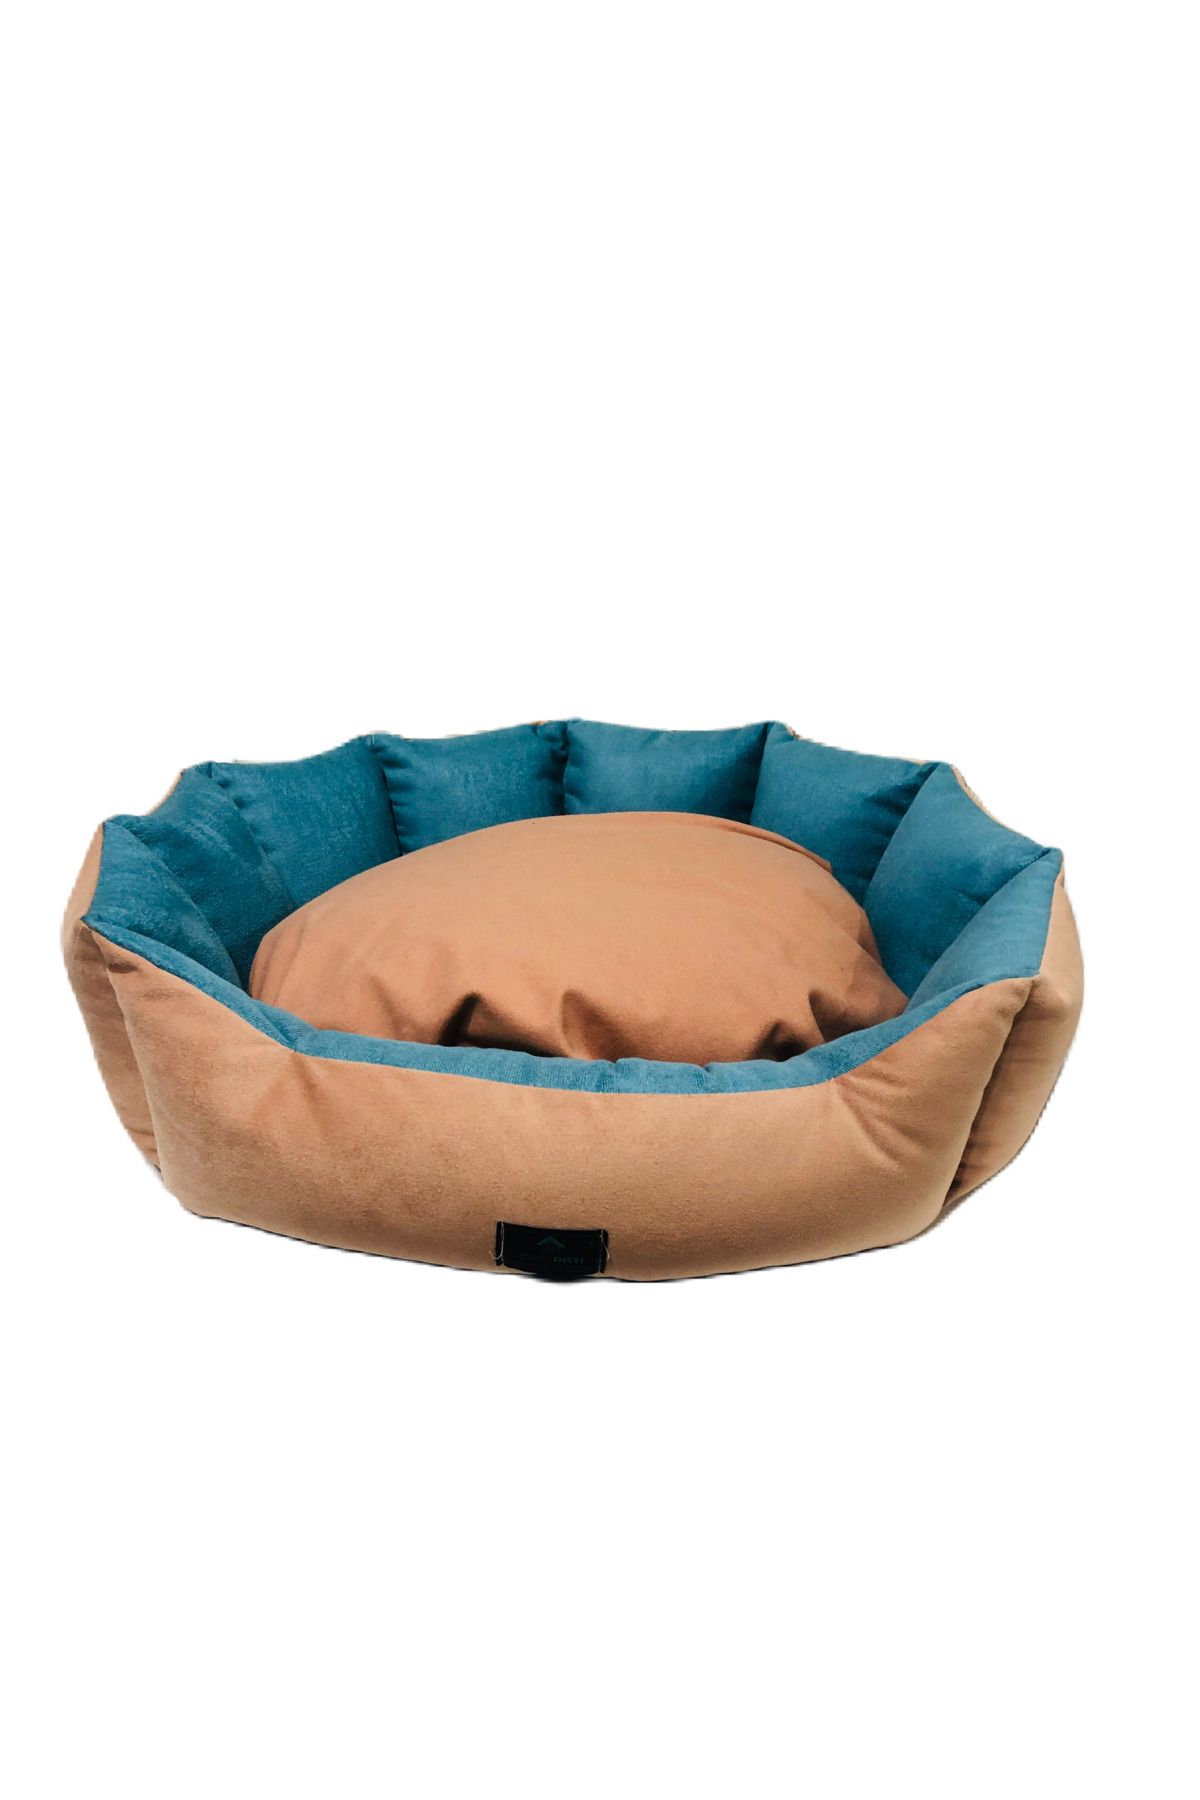 Çati Pati Çatı pati bella kedi köpek yatağı